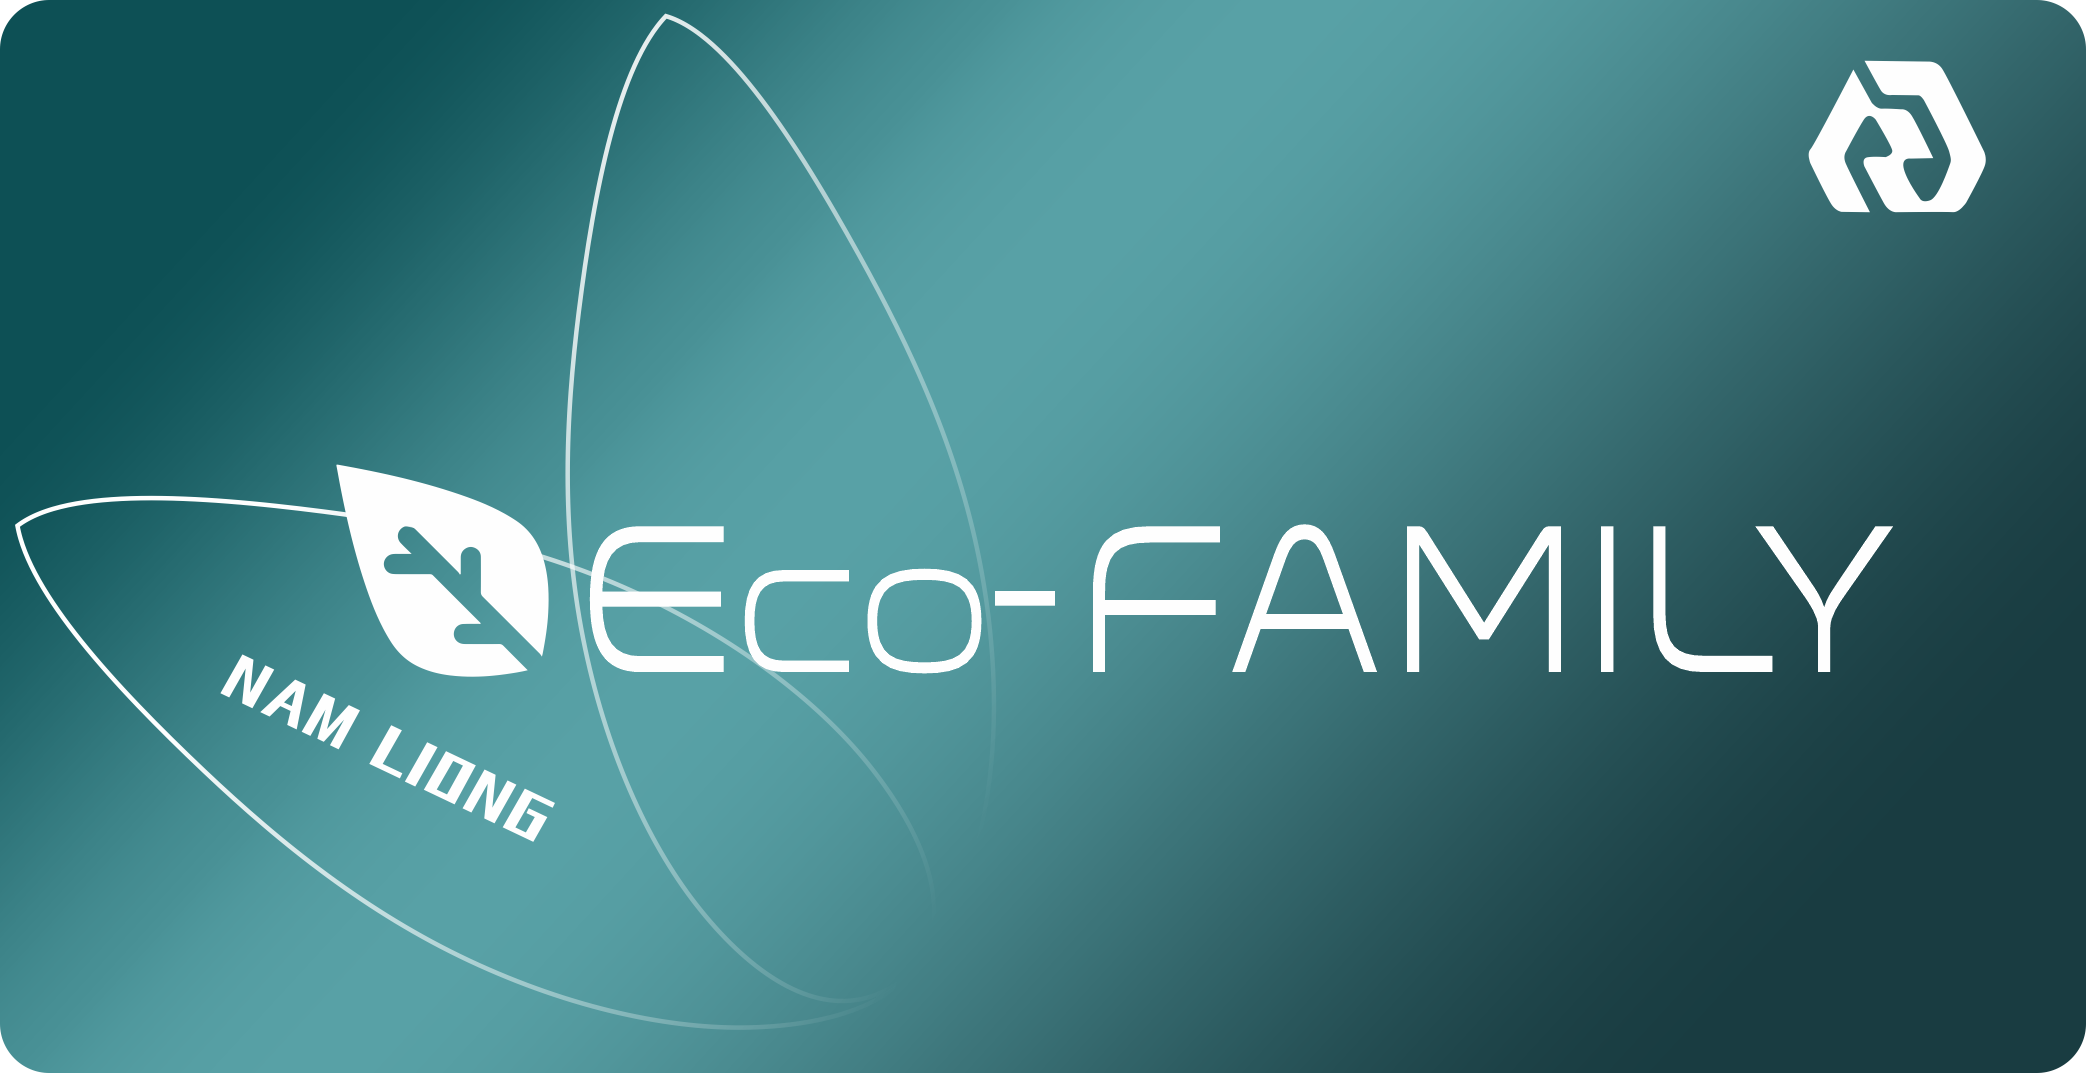 Nam Liong Global Eco-Family